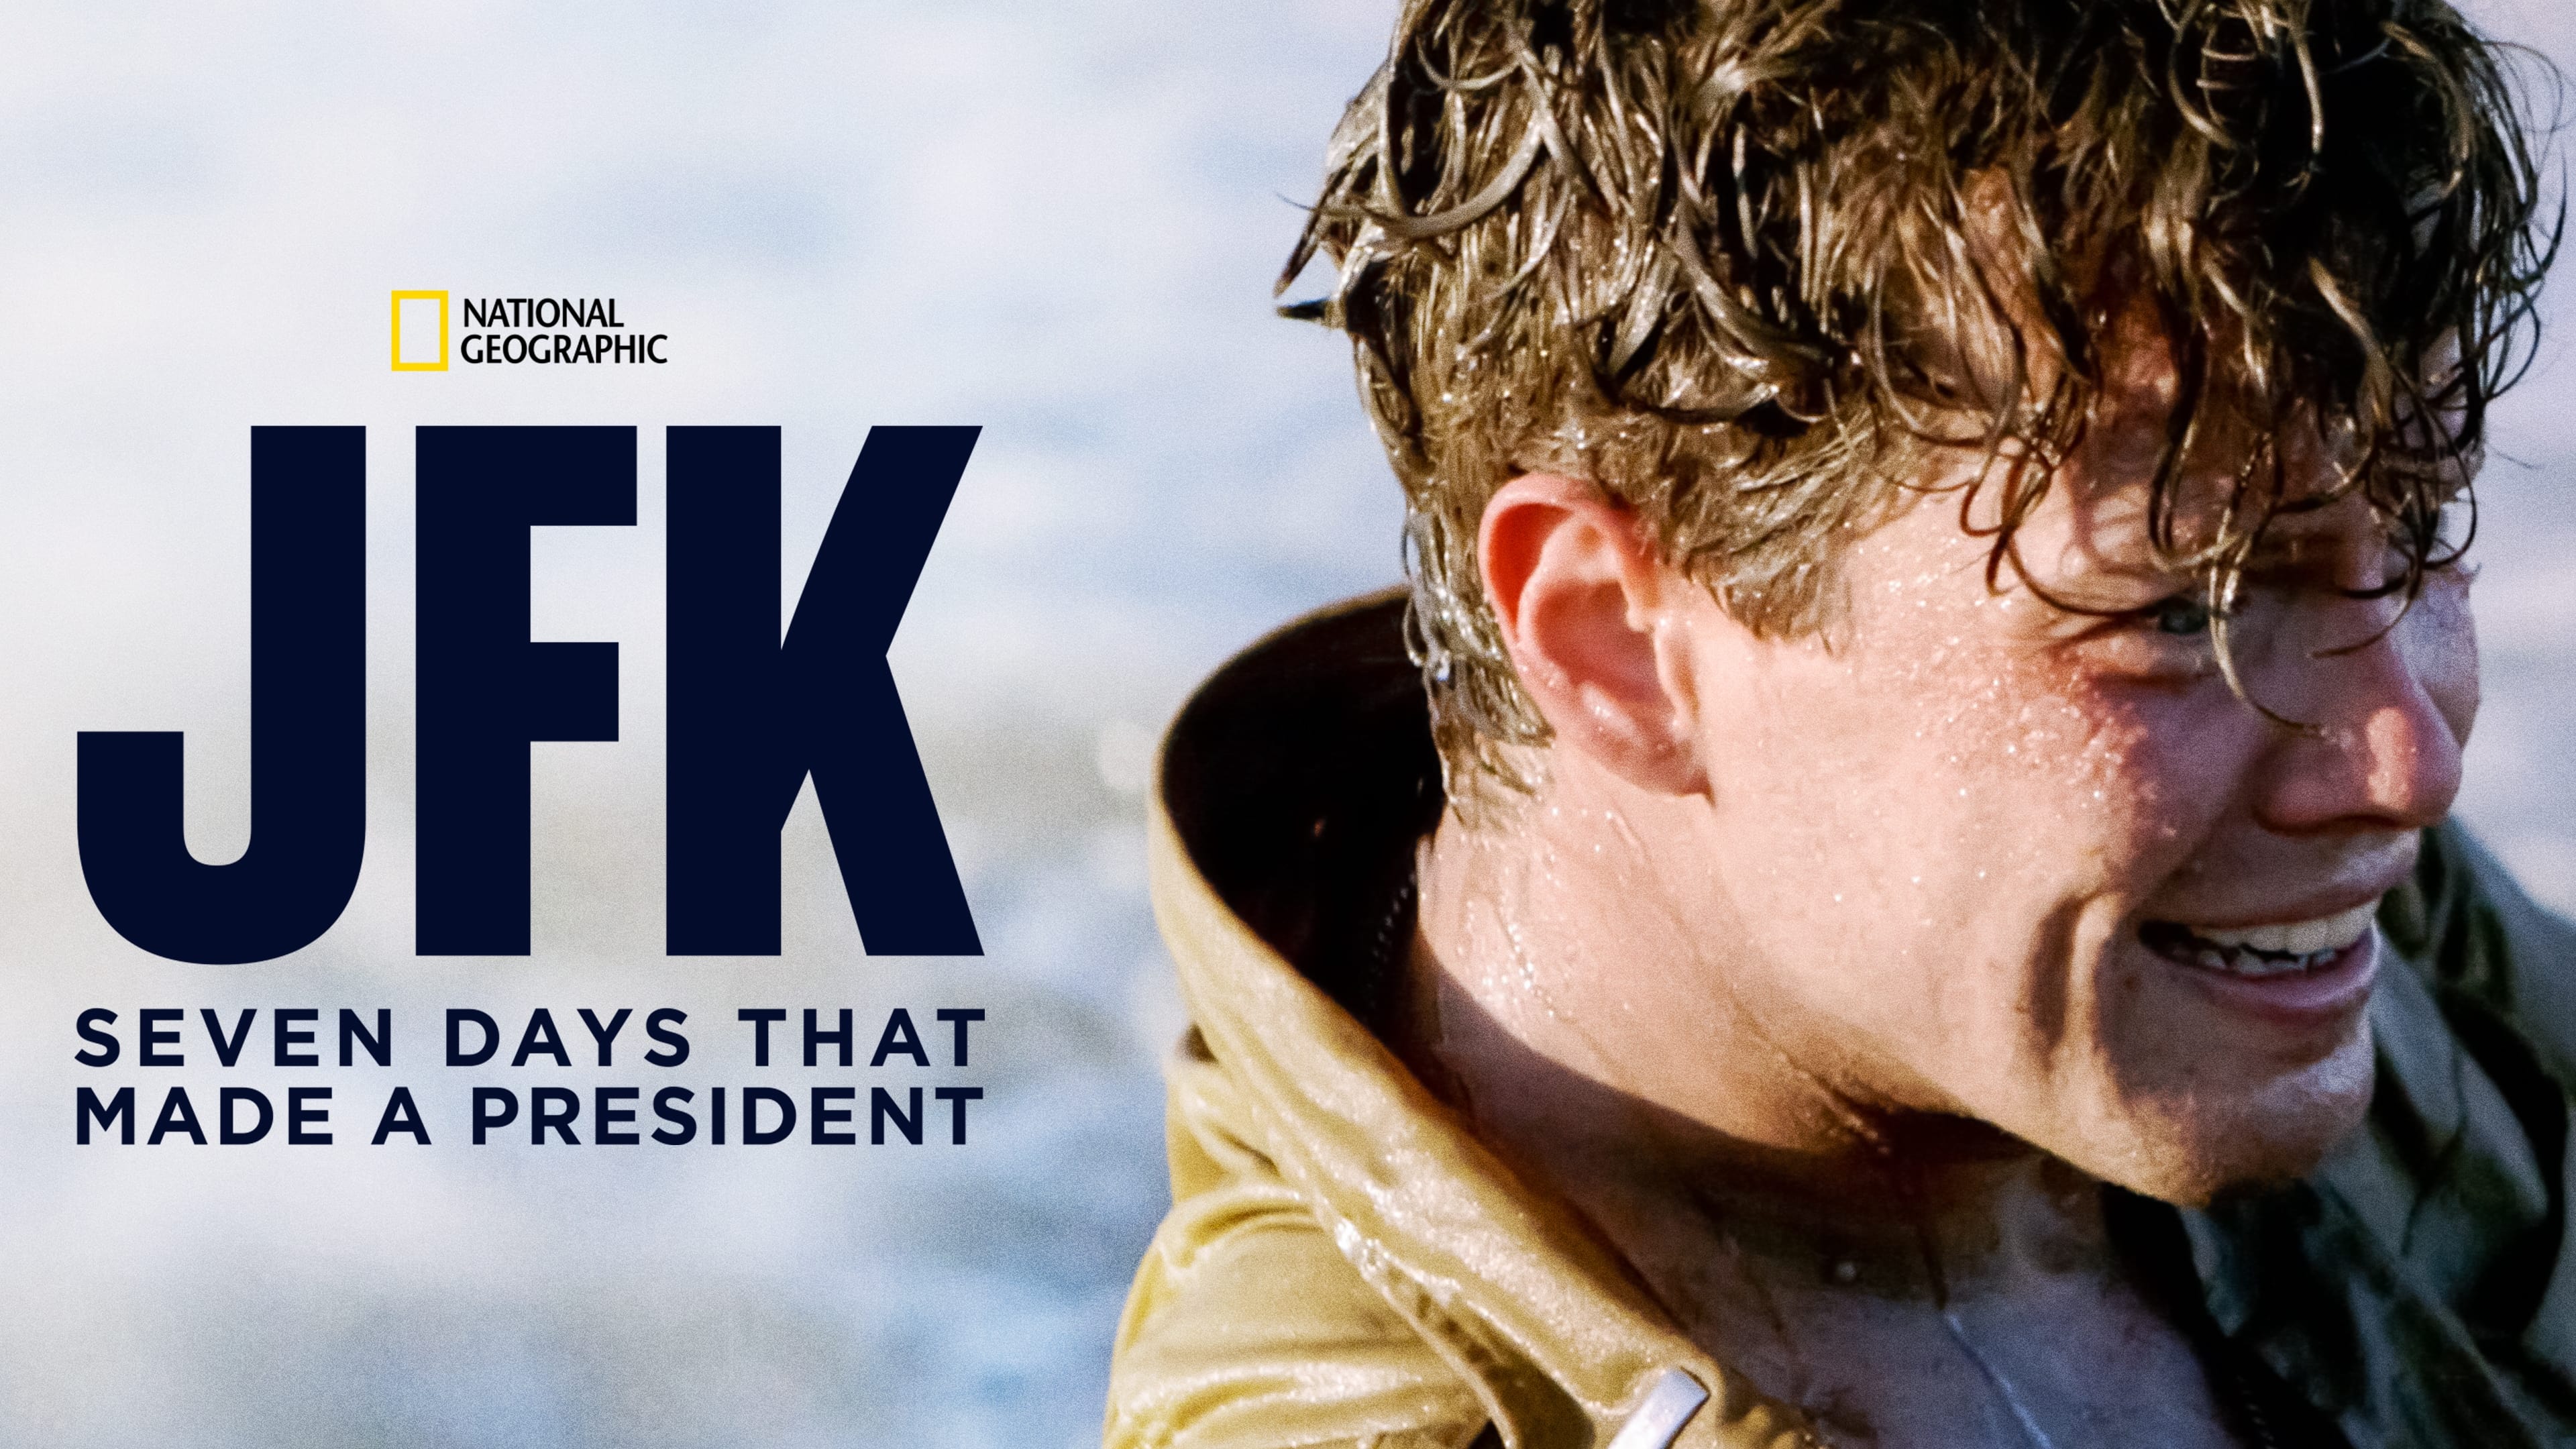 JFK: Seven Days That Made a President (2013)